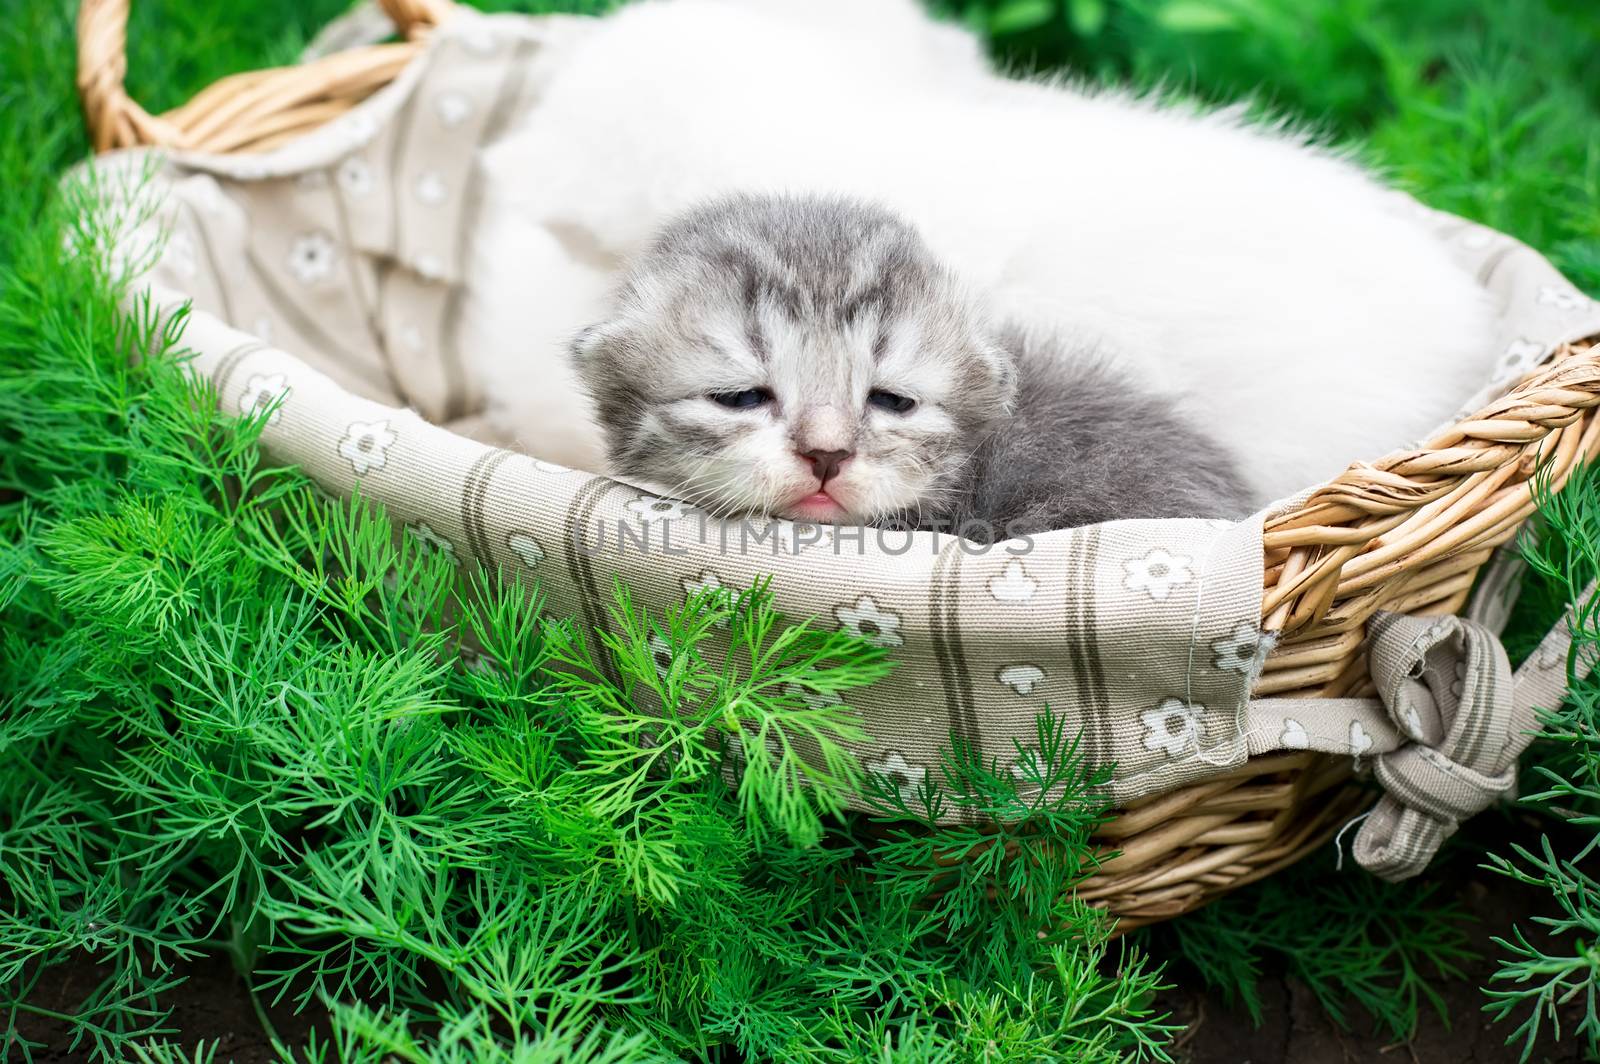 newborn kittens by LMykola